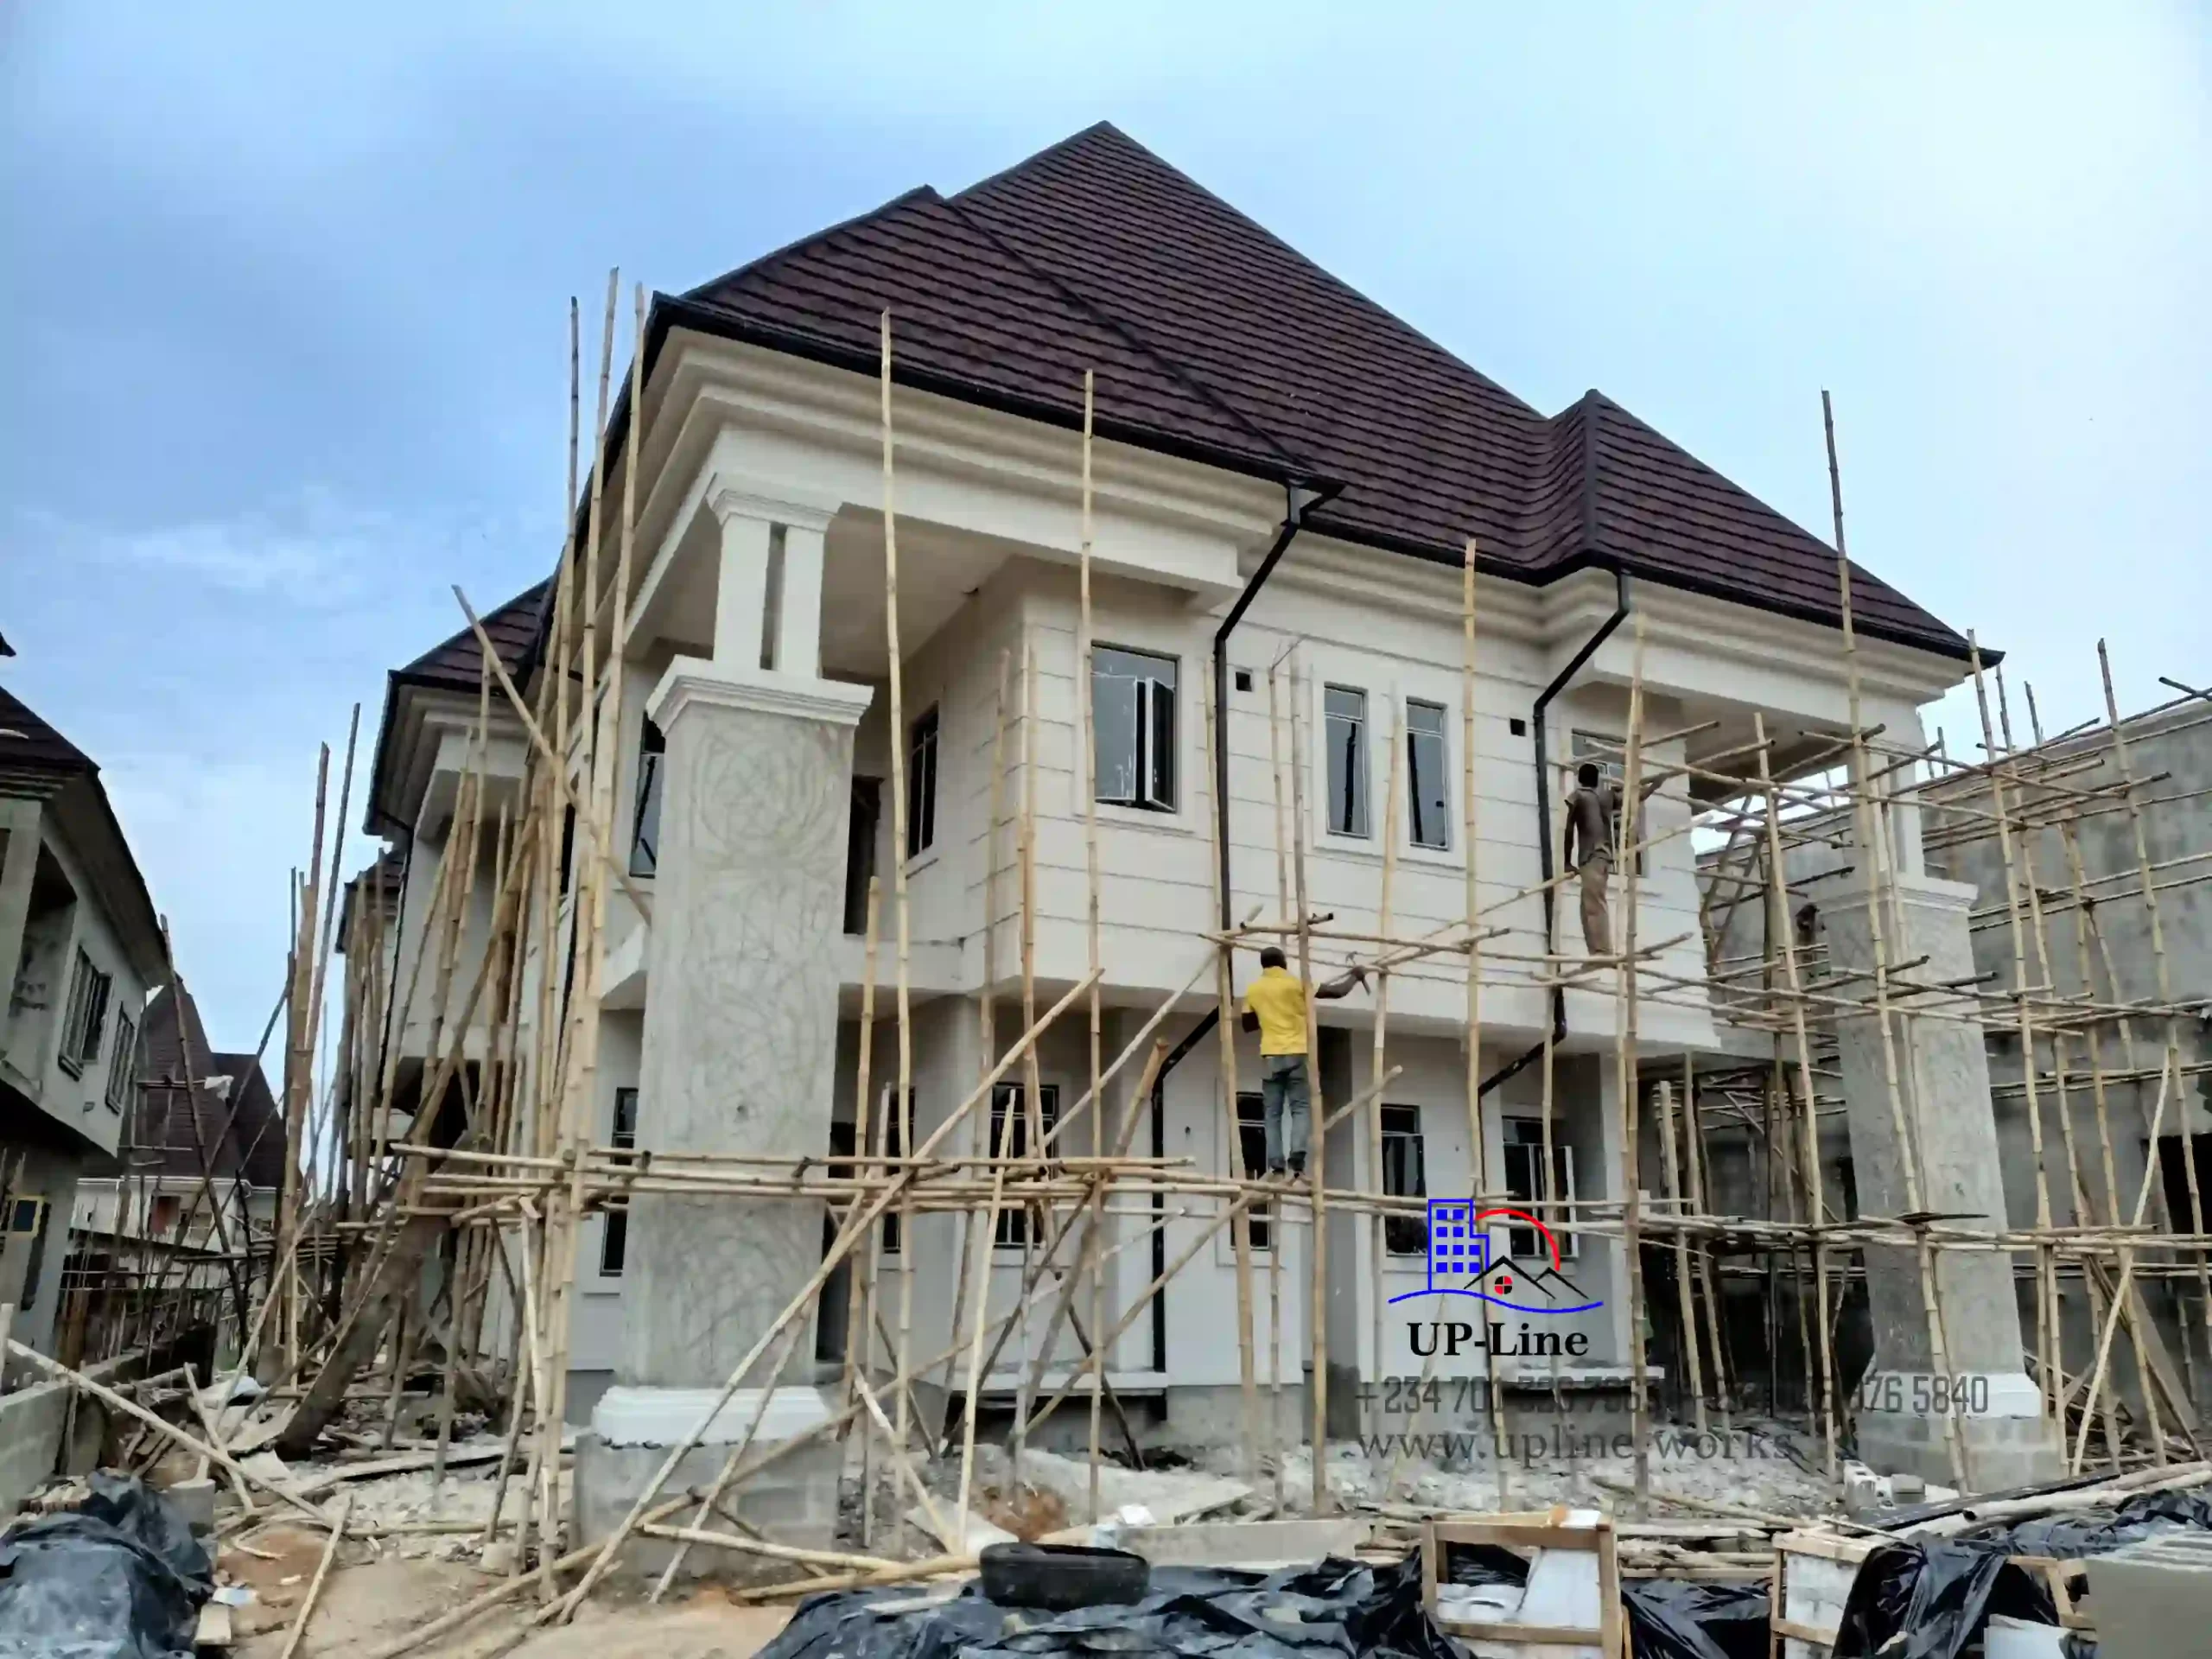 6 Bedroom duplex house plans in Nigeria